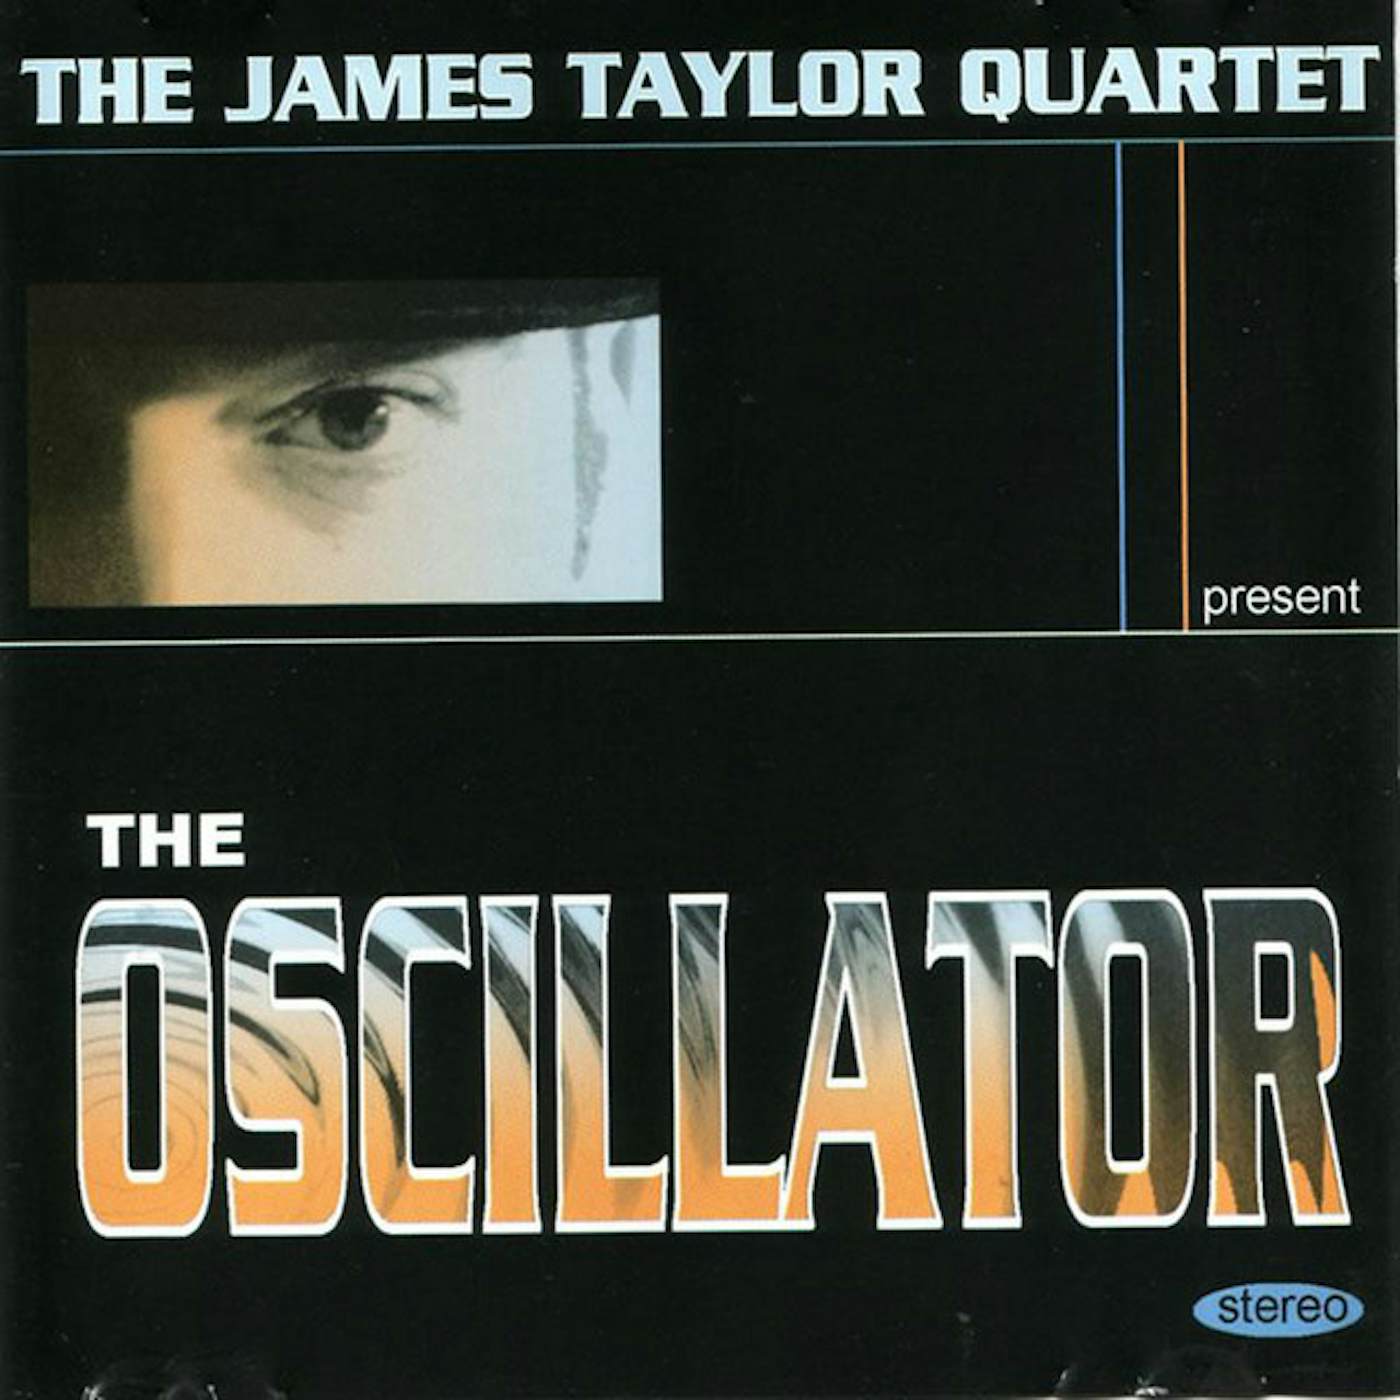 James Taylor Quartet OSCILLATOR CD